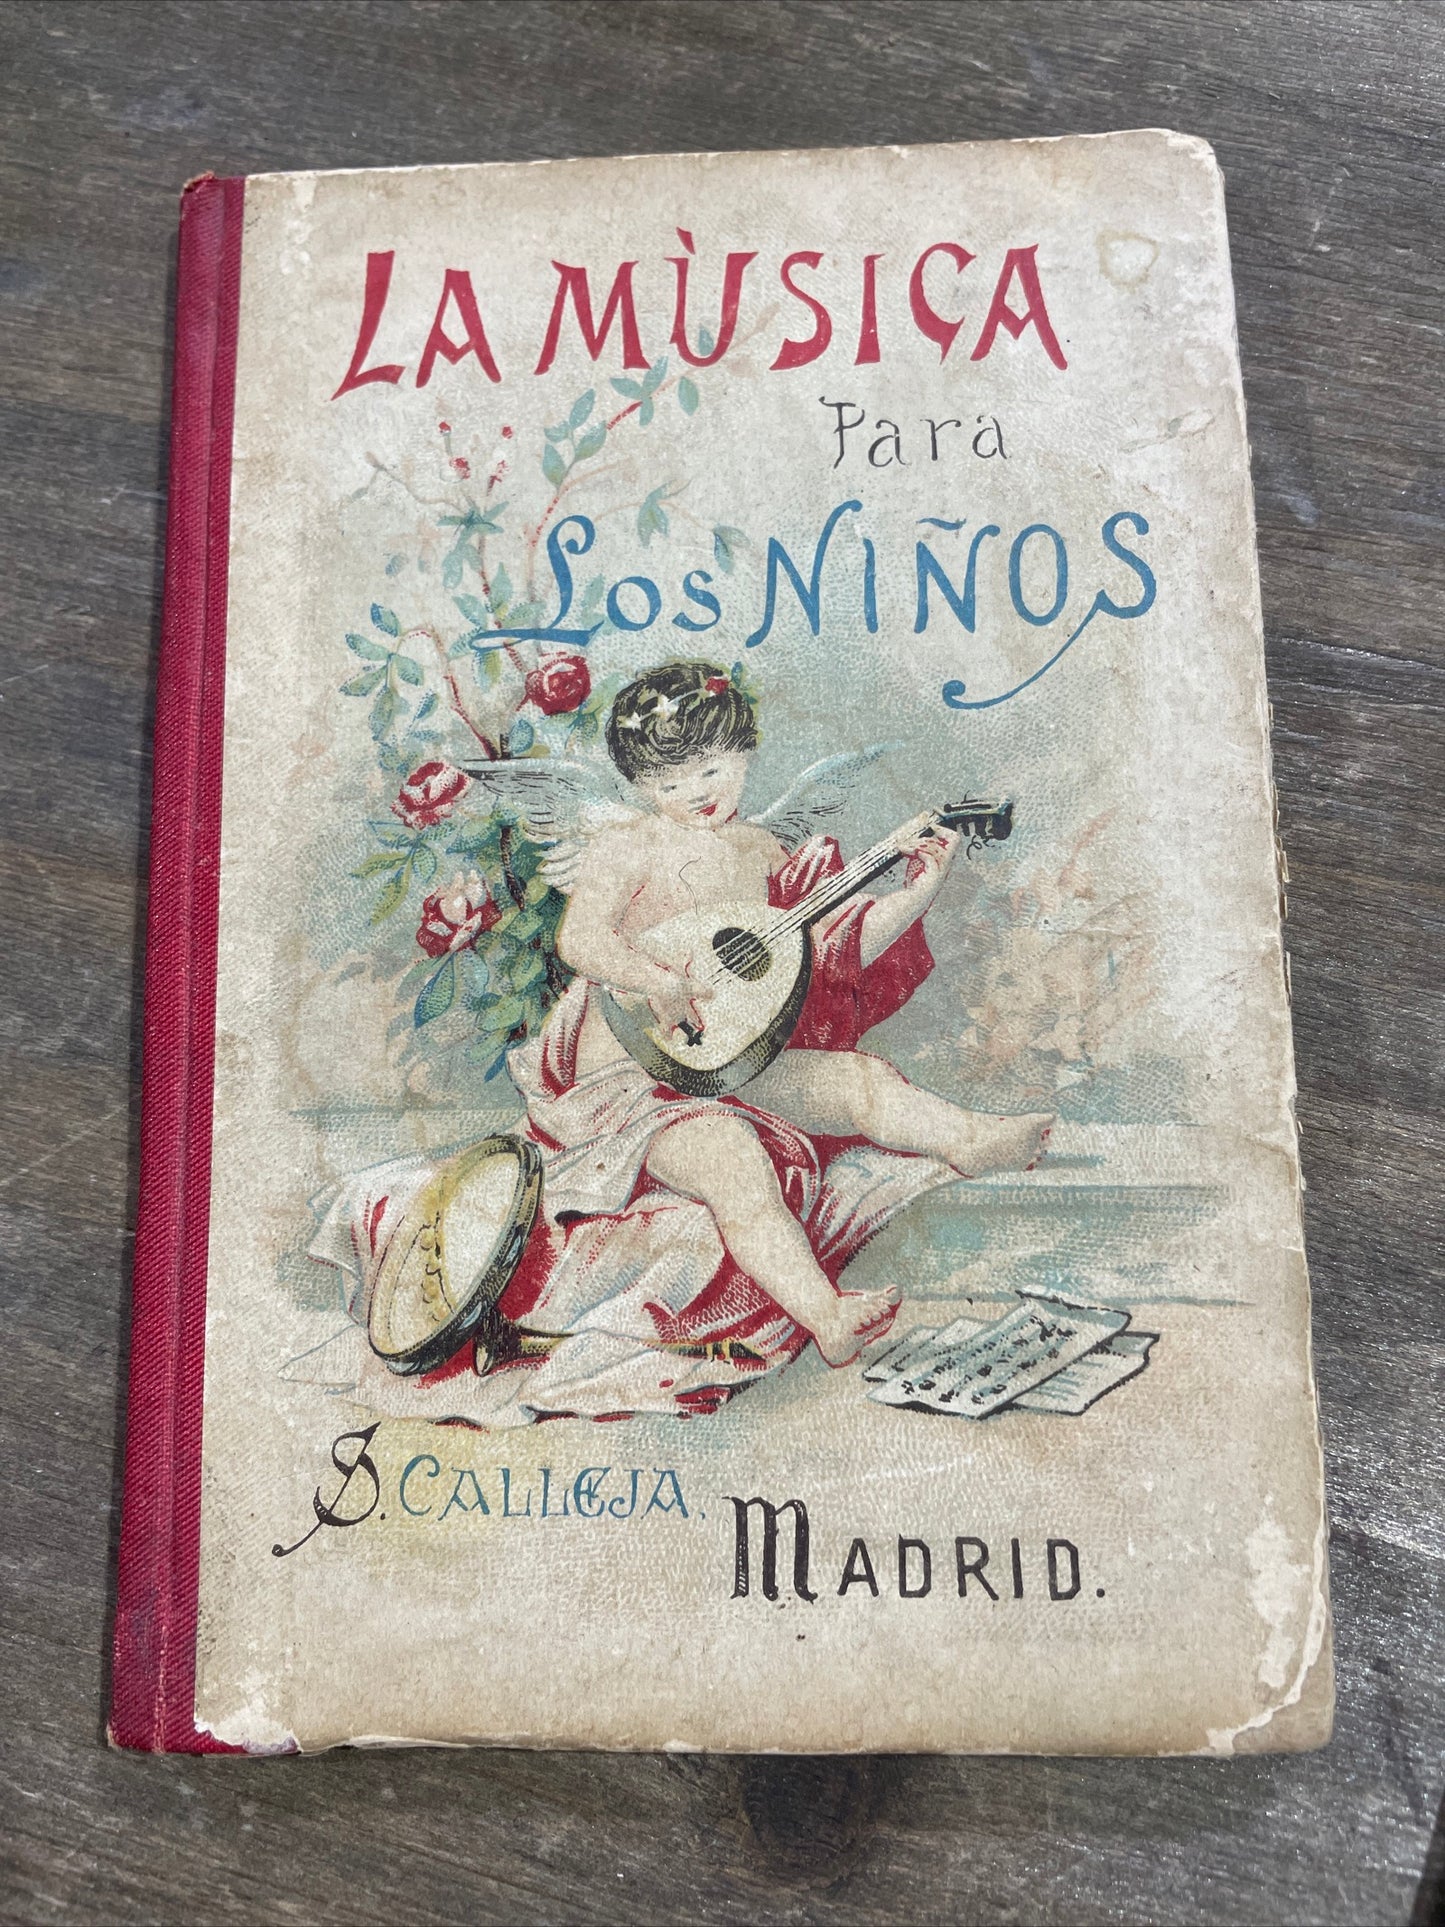 Rare 1884 Children's Music Book